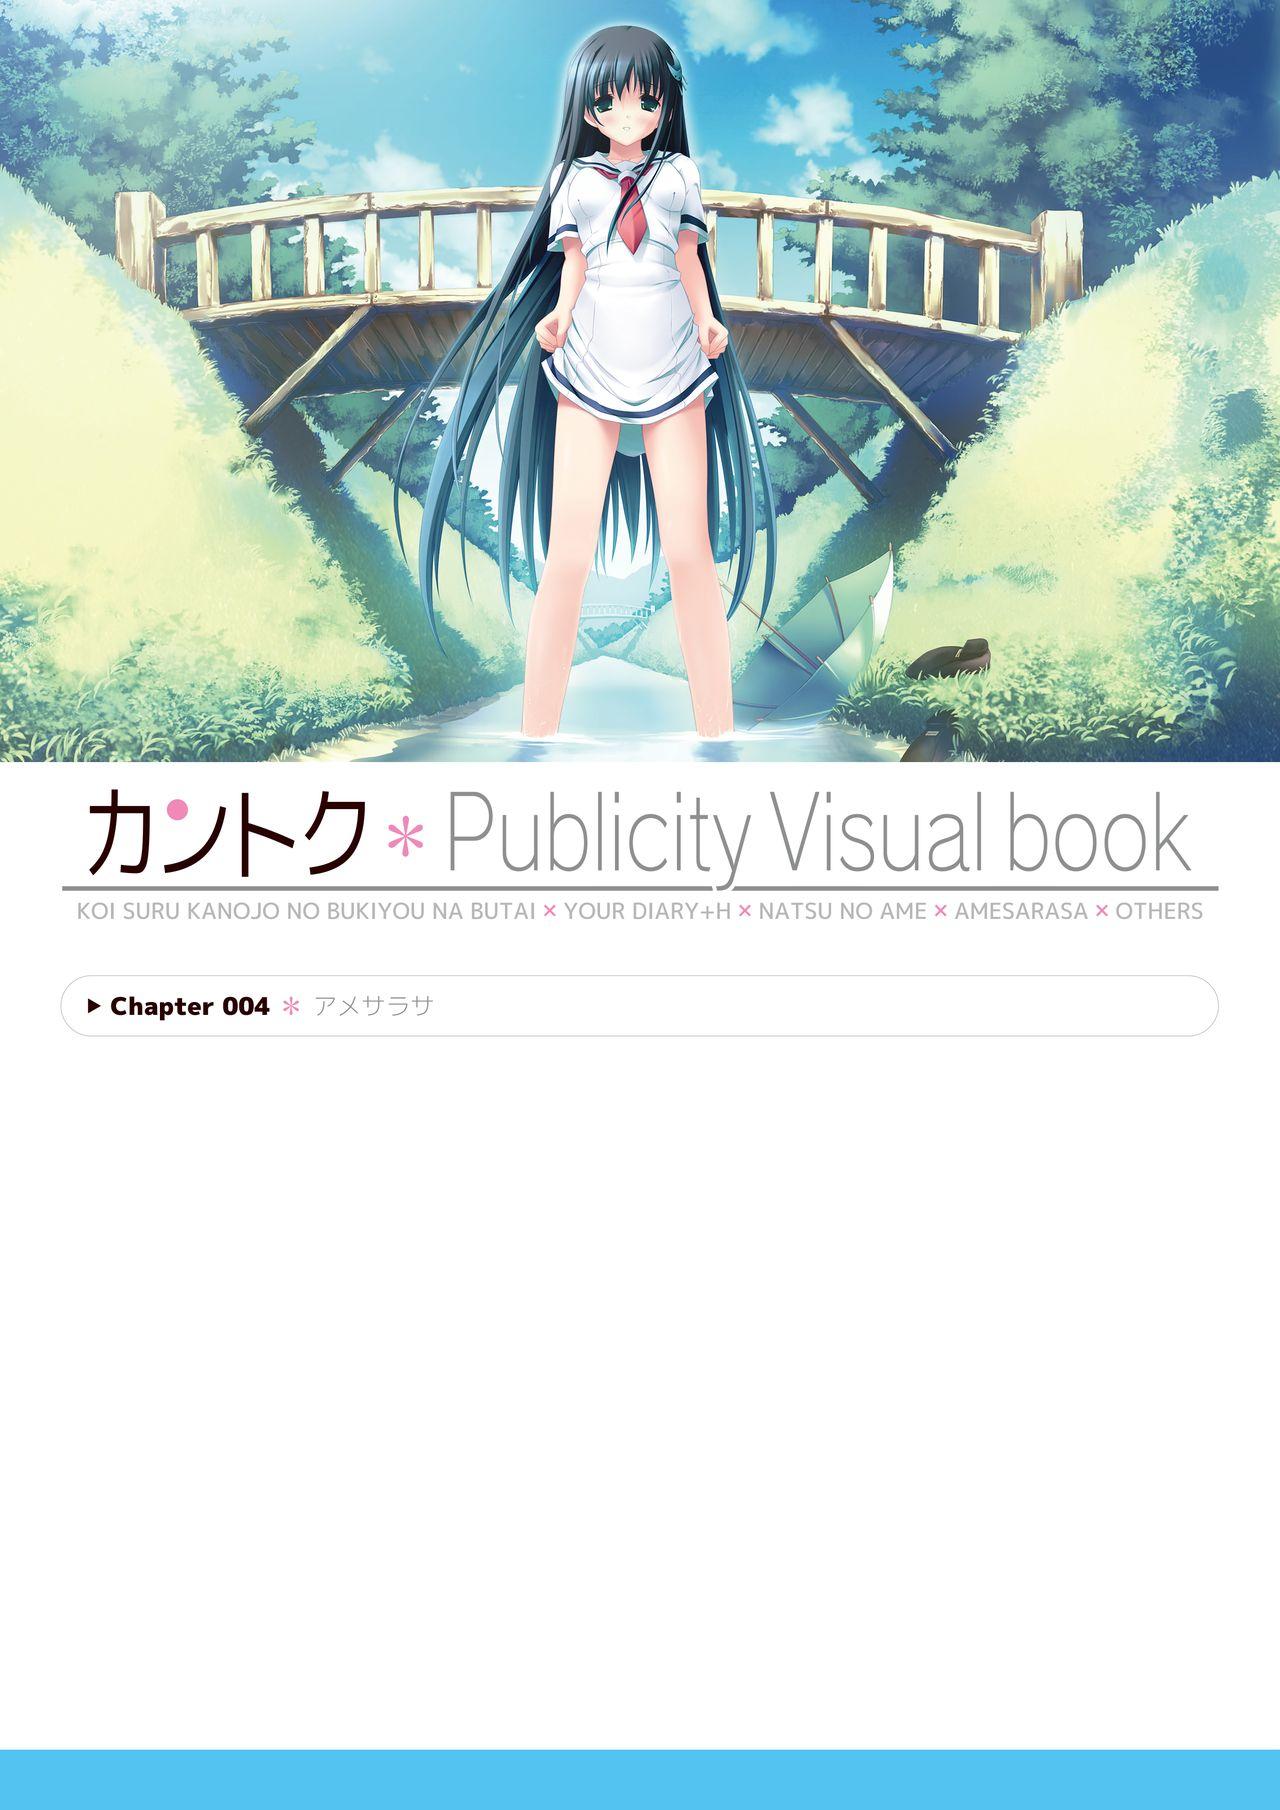 Kantoku Publicity Visual book 139